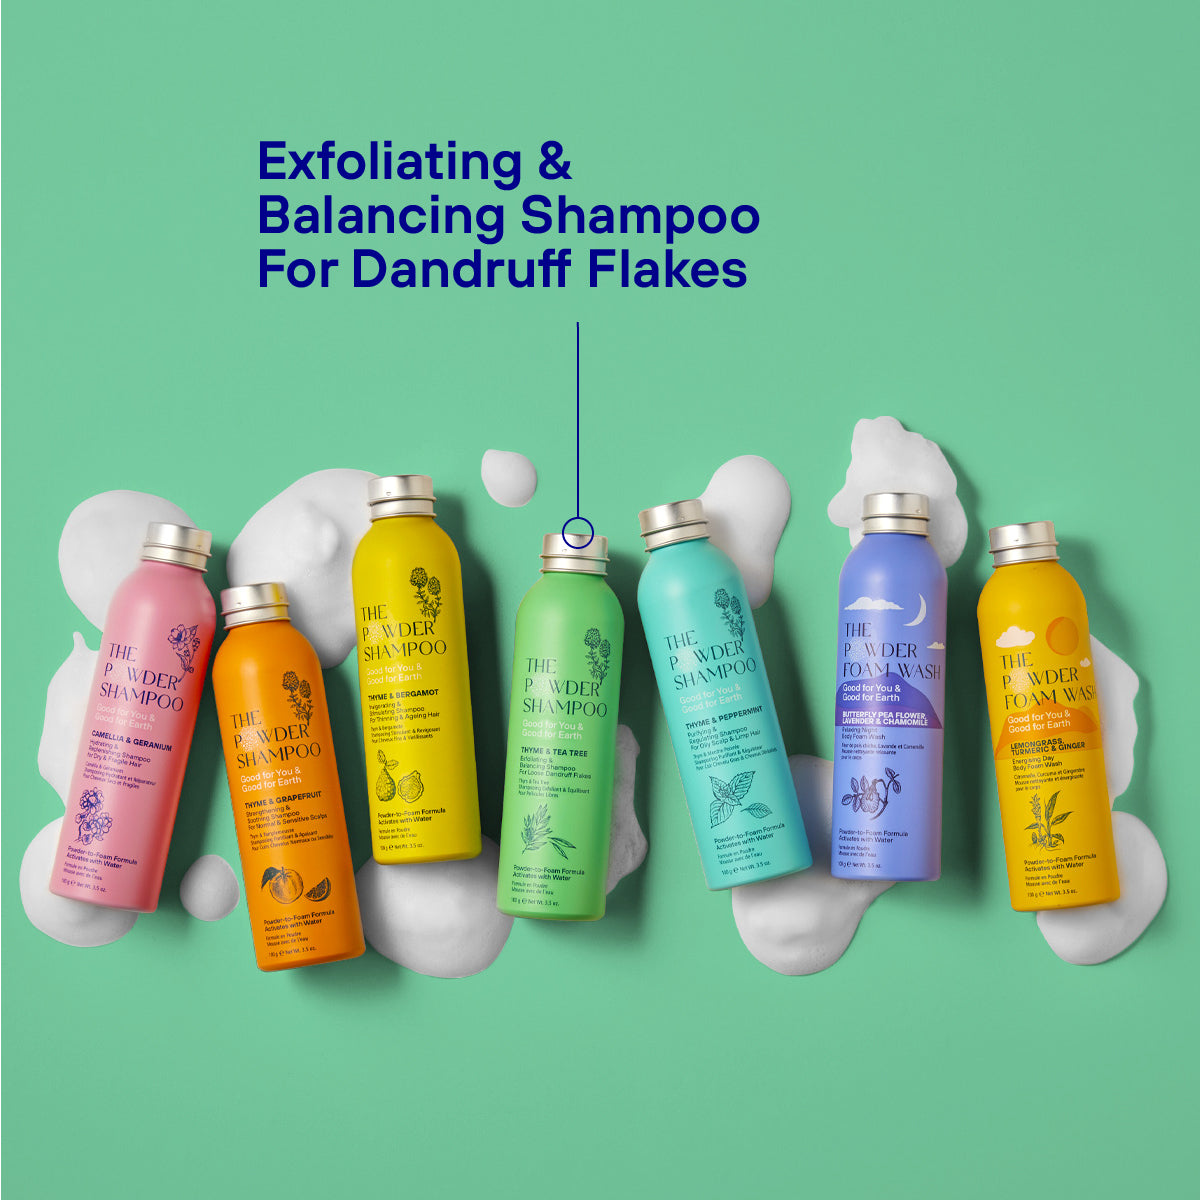 Mini bottle - Exfoliating & Balancing Powder Shampoo For Loose Dandruff Flakes 20g / 0.70oz